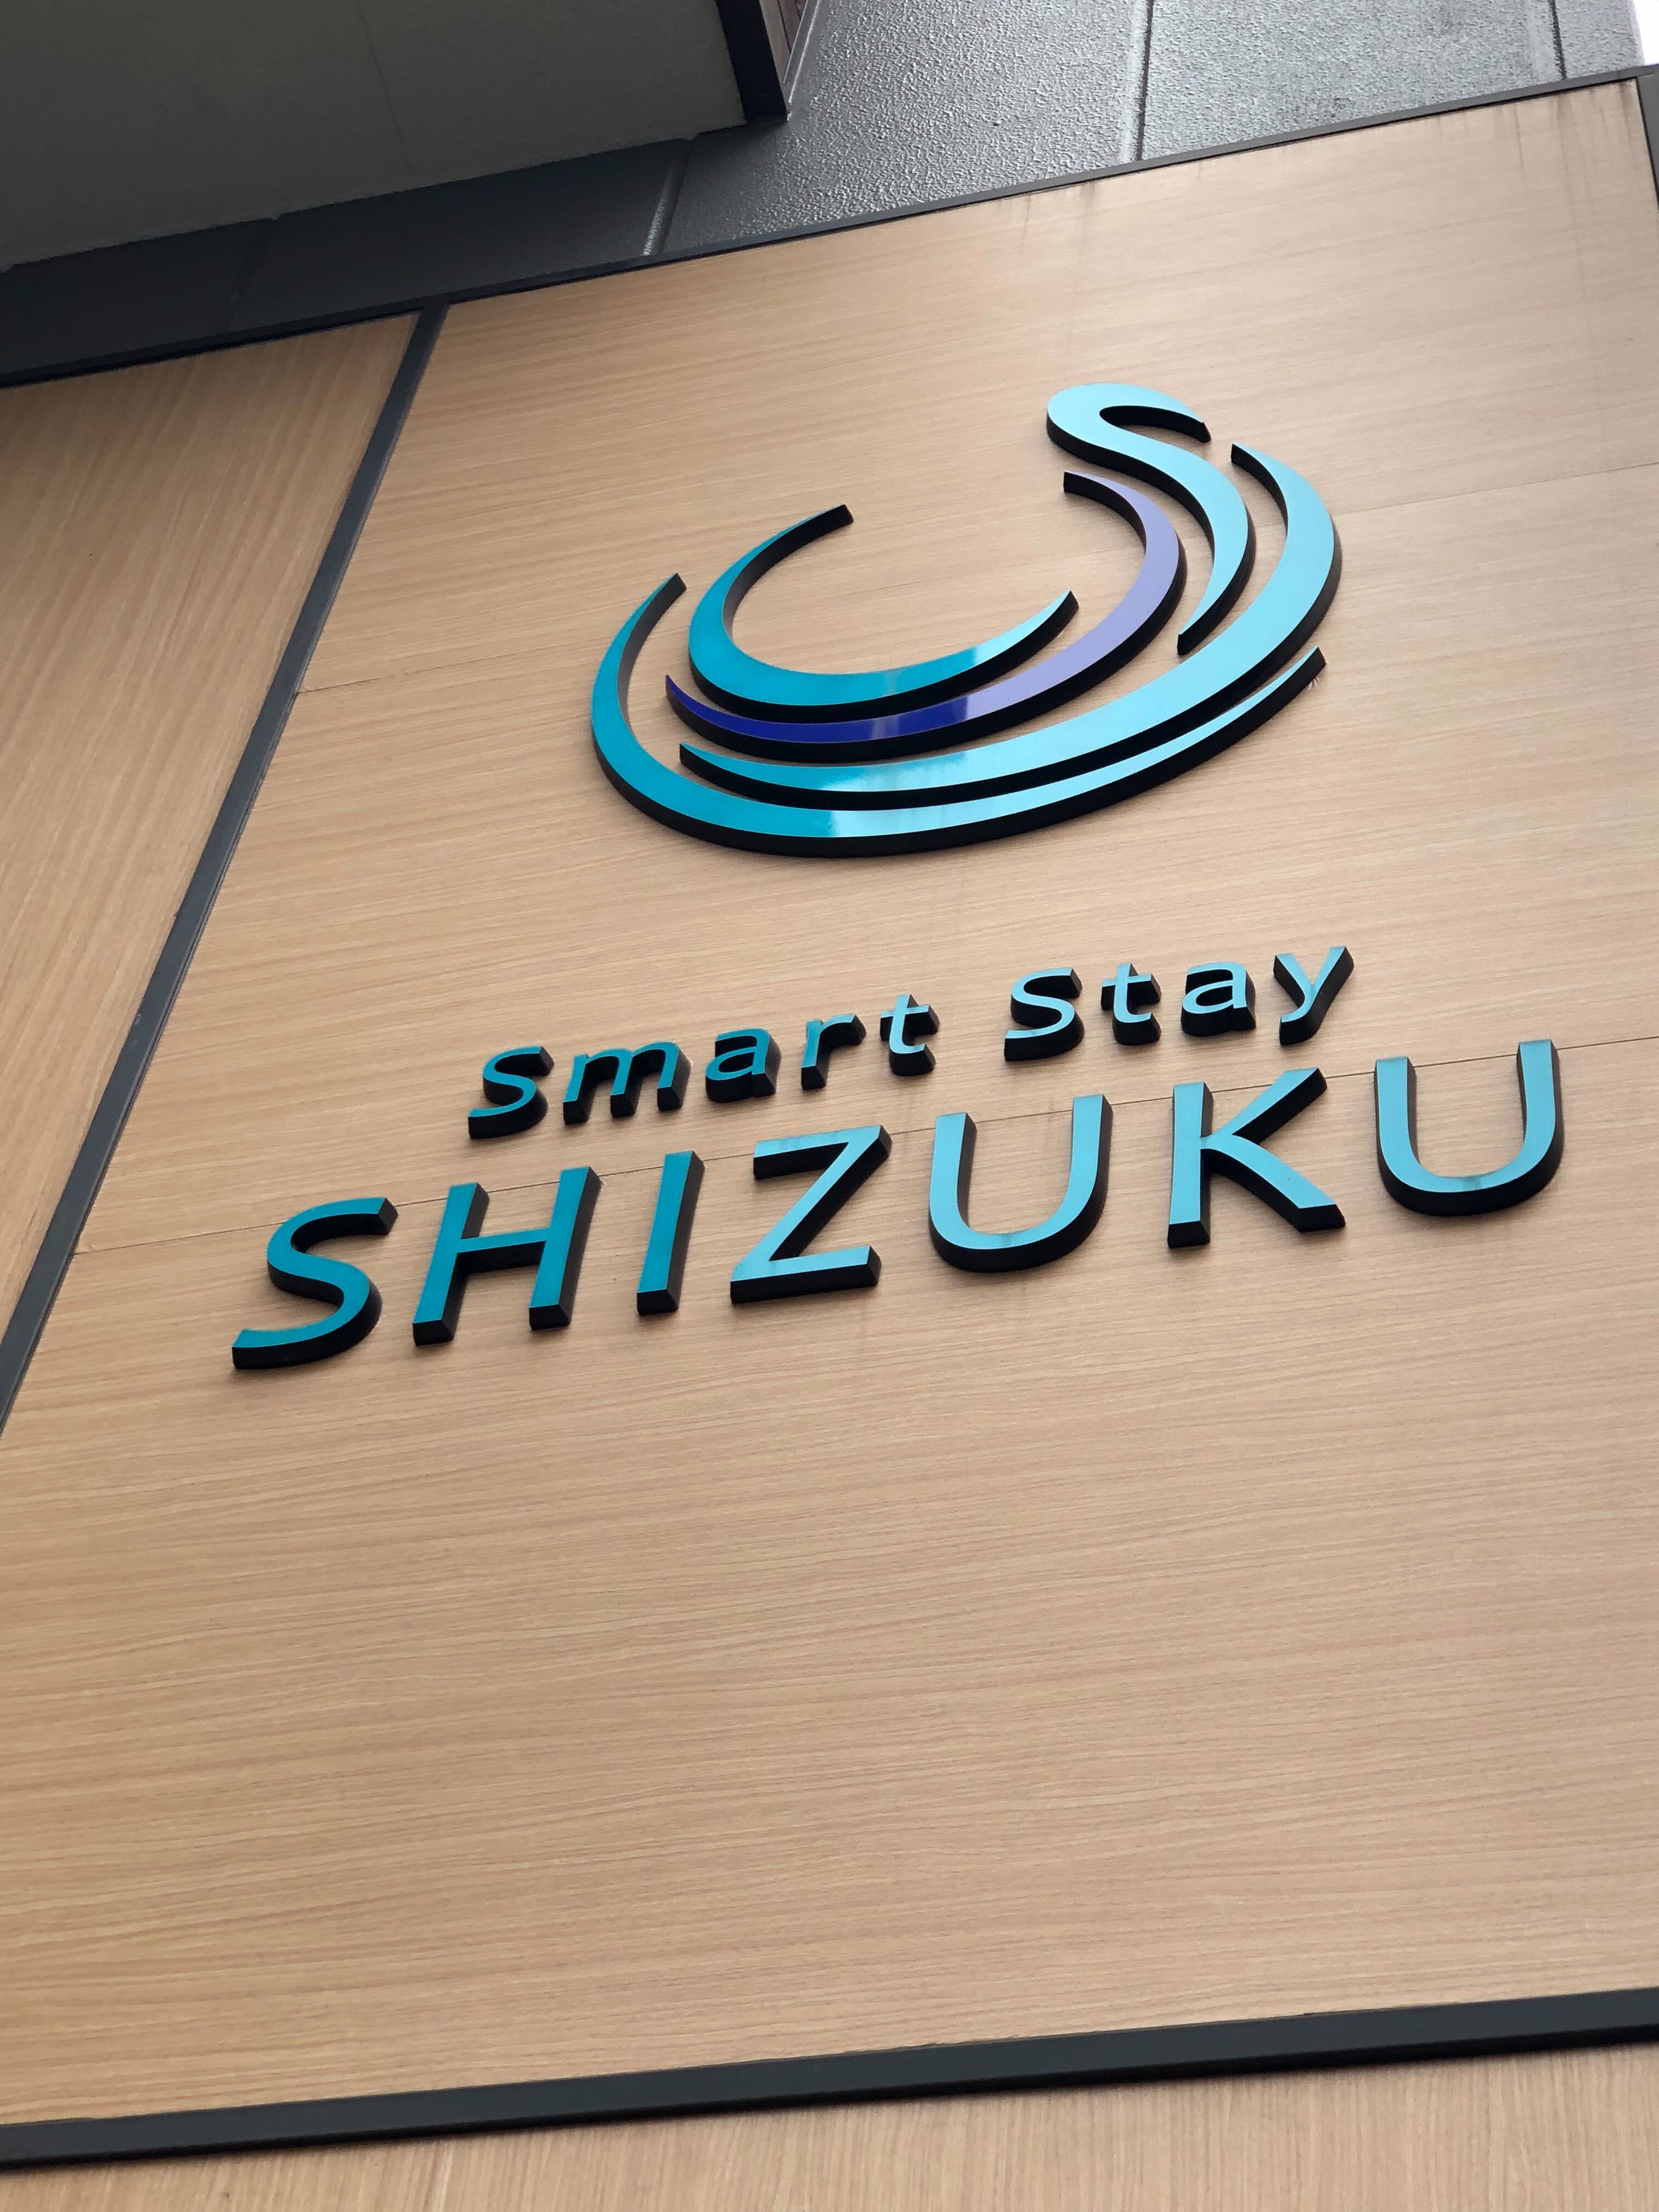 Smart Stay SHIZUKU 品川大井町